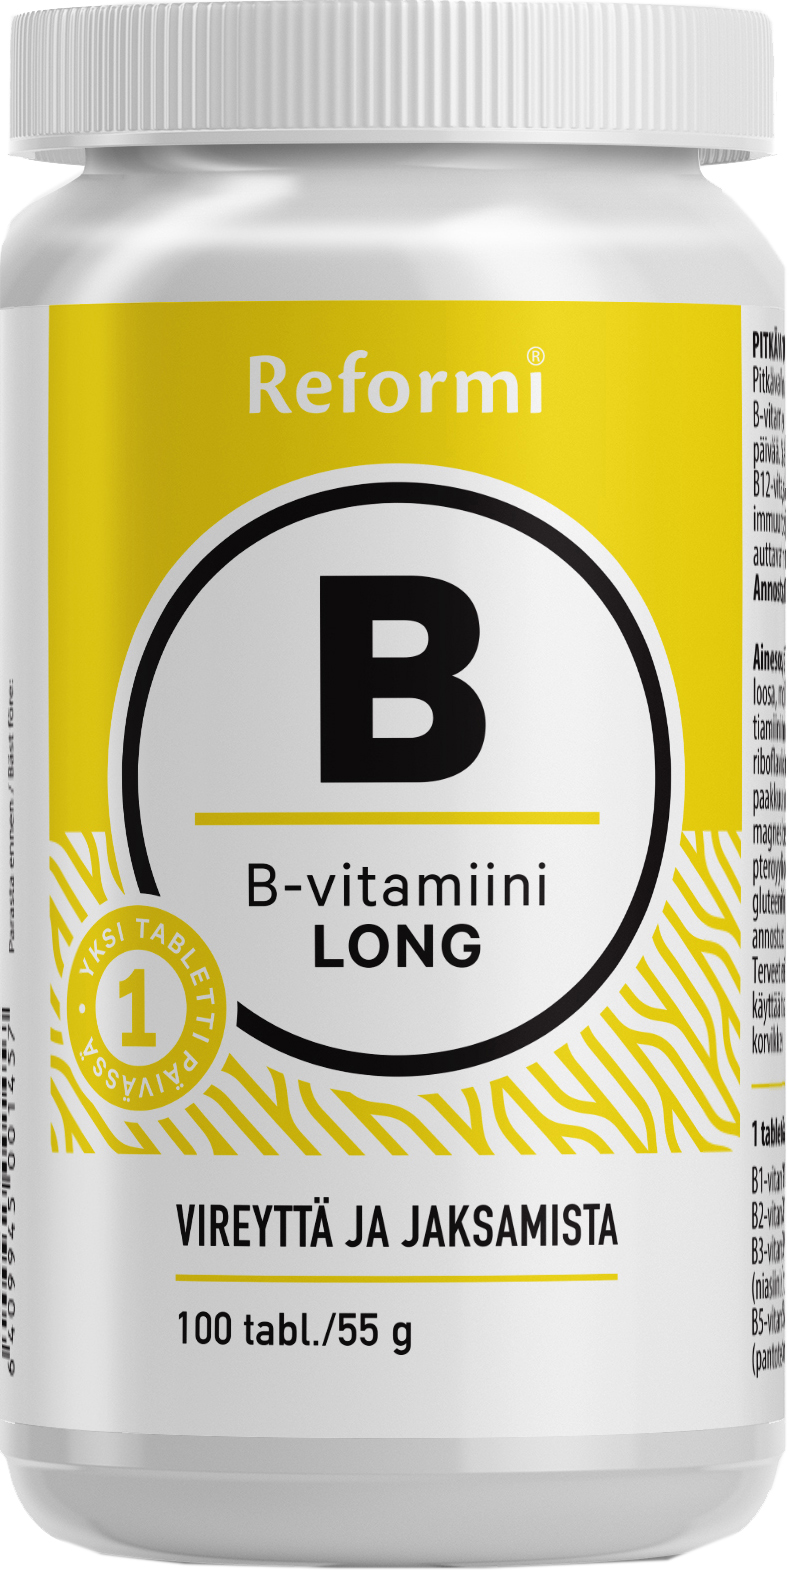 Reformai B-vitamiini Long 100 tabl.